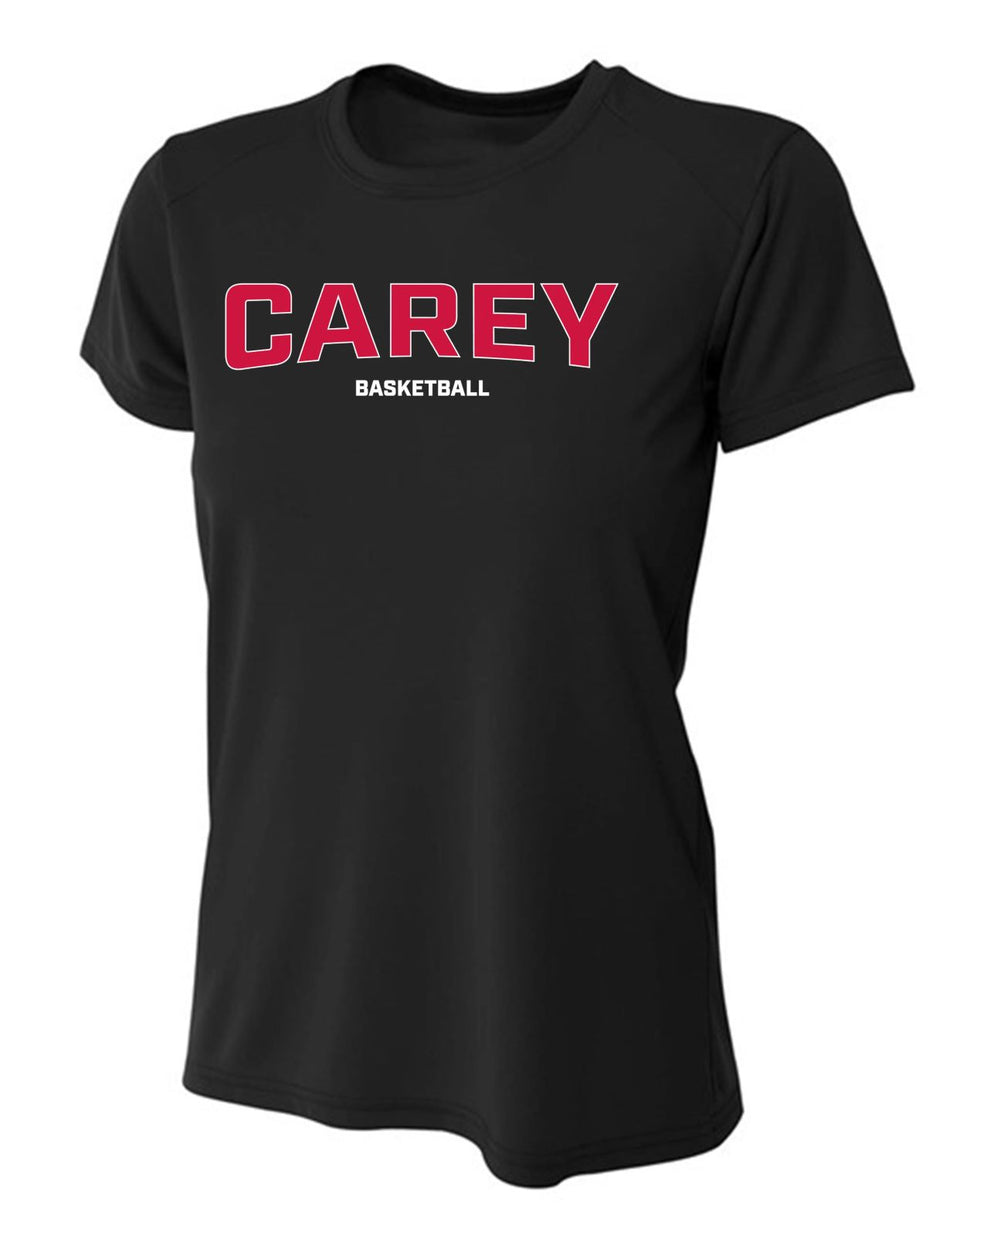 WCU Basketball Women's Short-Sleeve Performance Shirt WCU Basketball Black CAREY - Third Coast Soccer